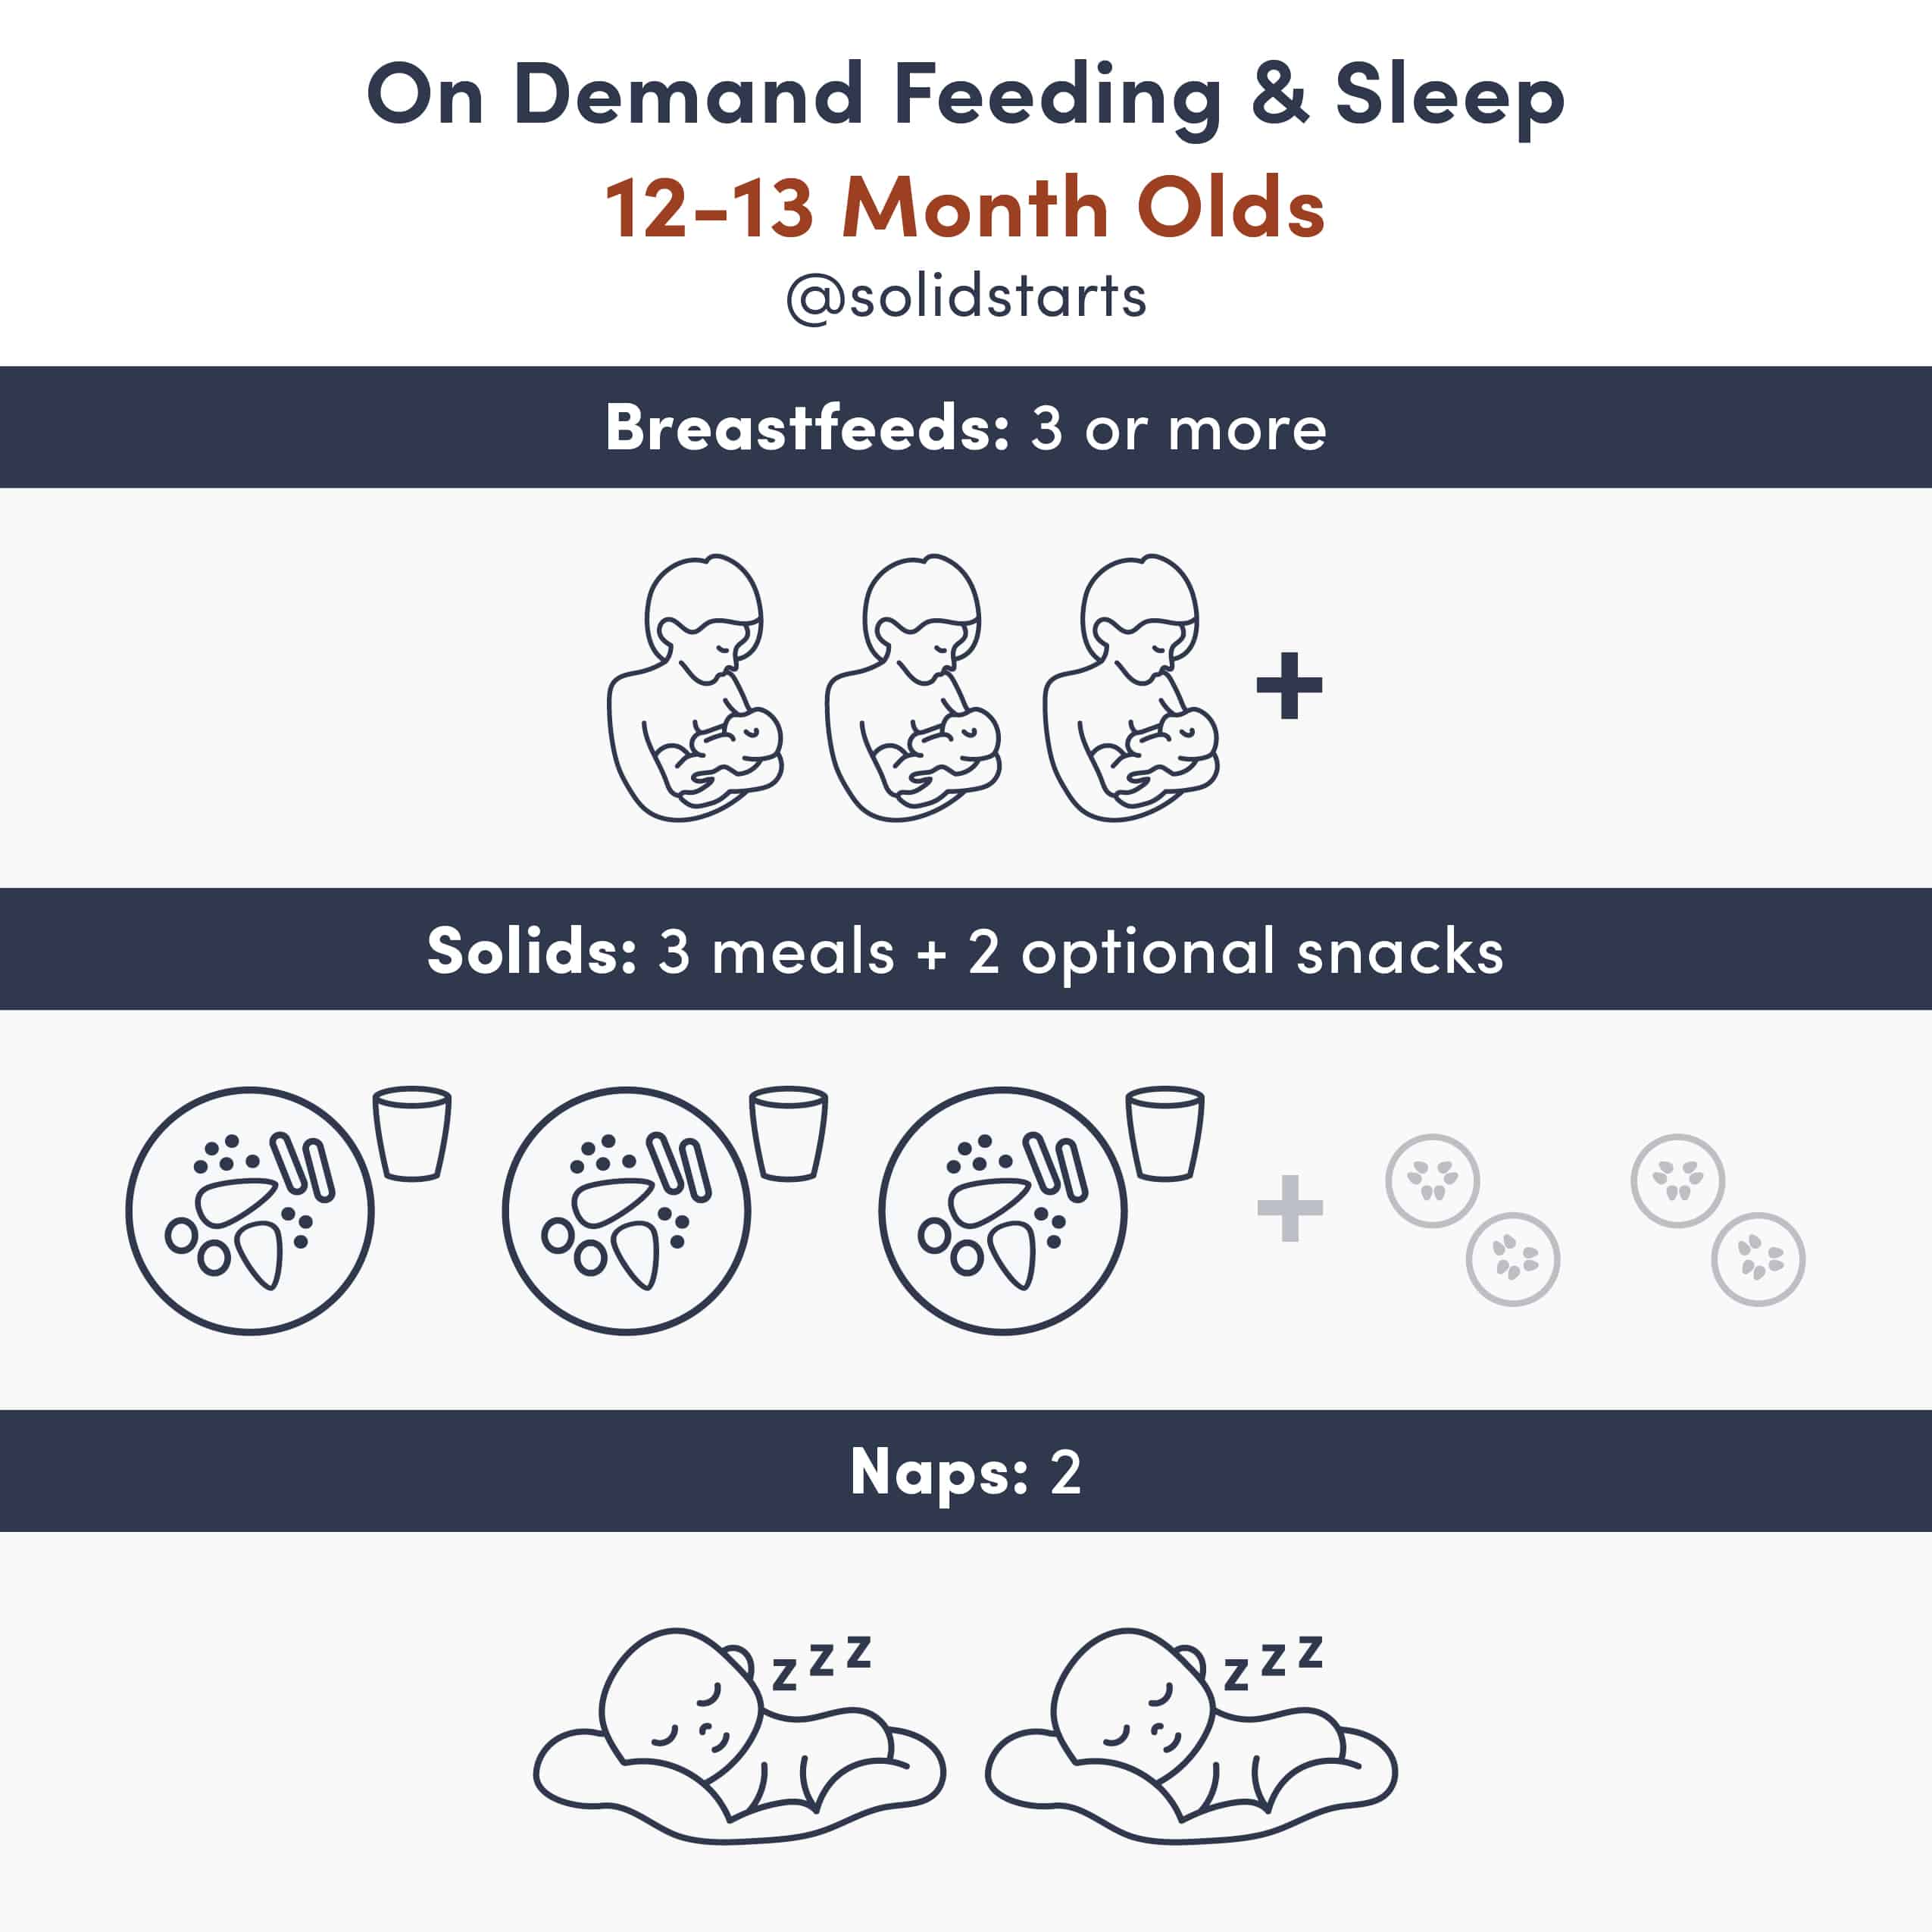 Baby Feeding Schedule: 9 to 12 Months Old